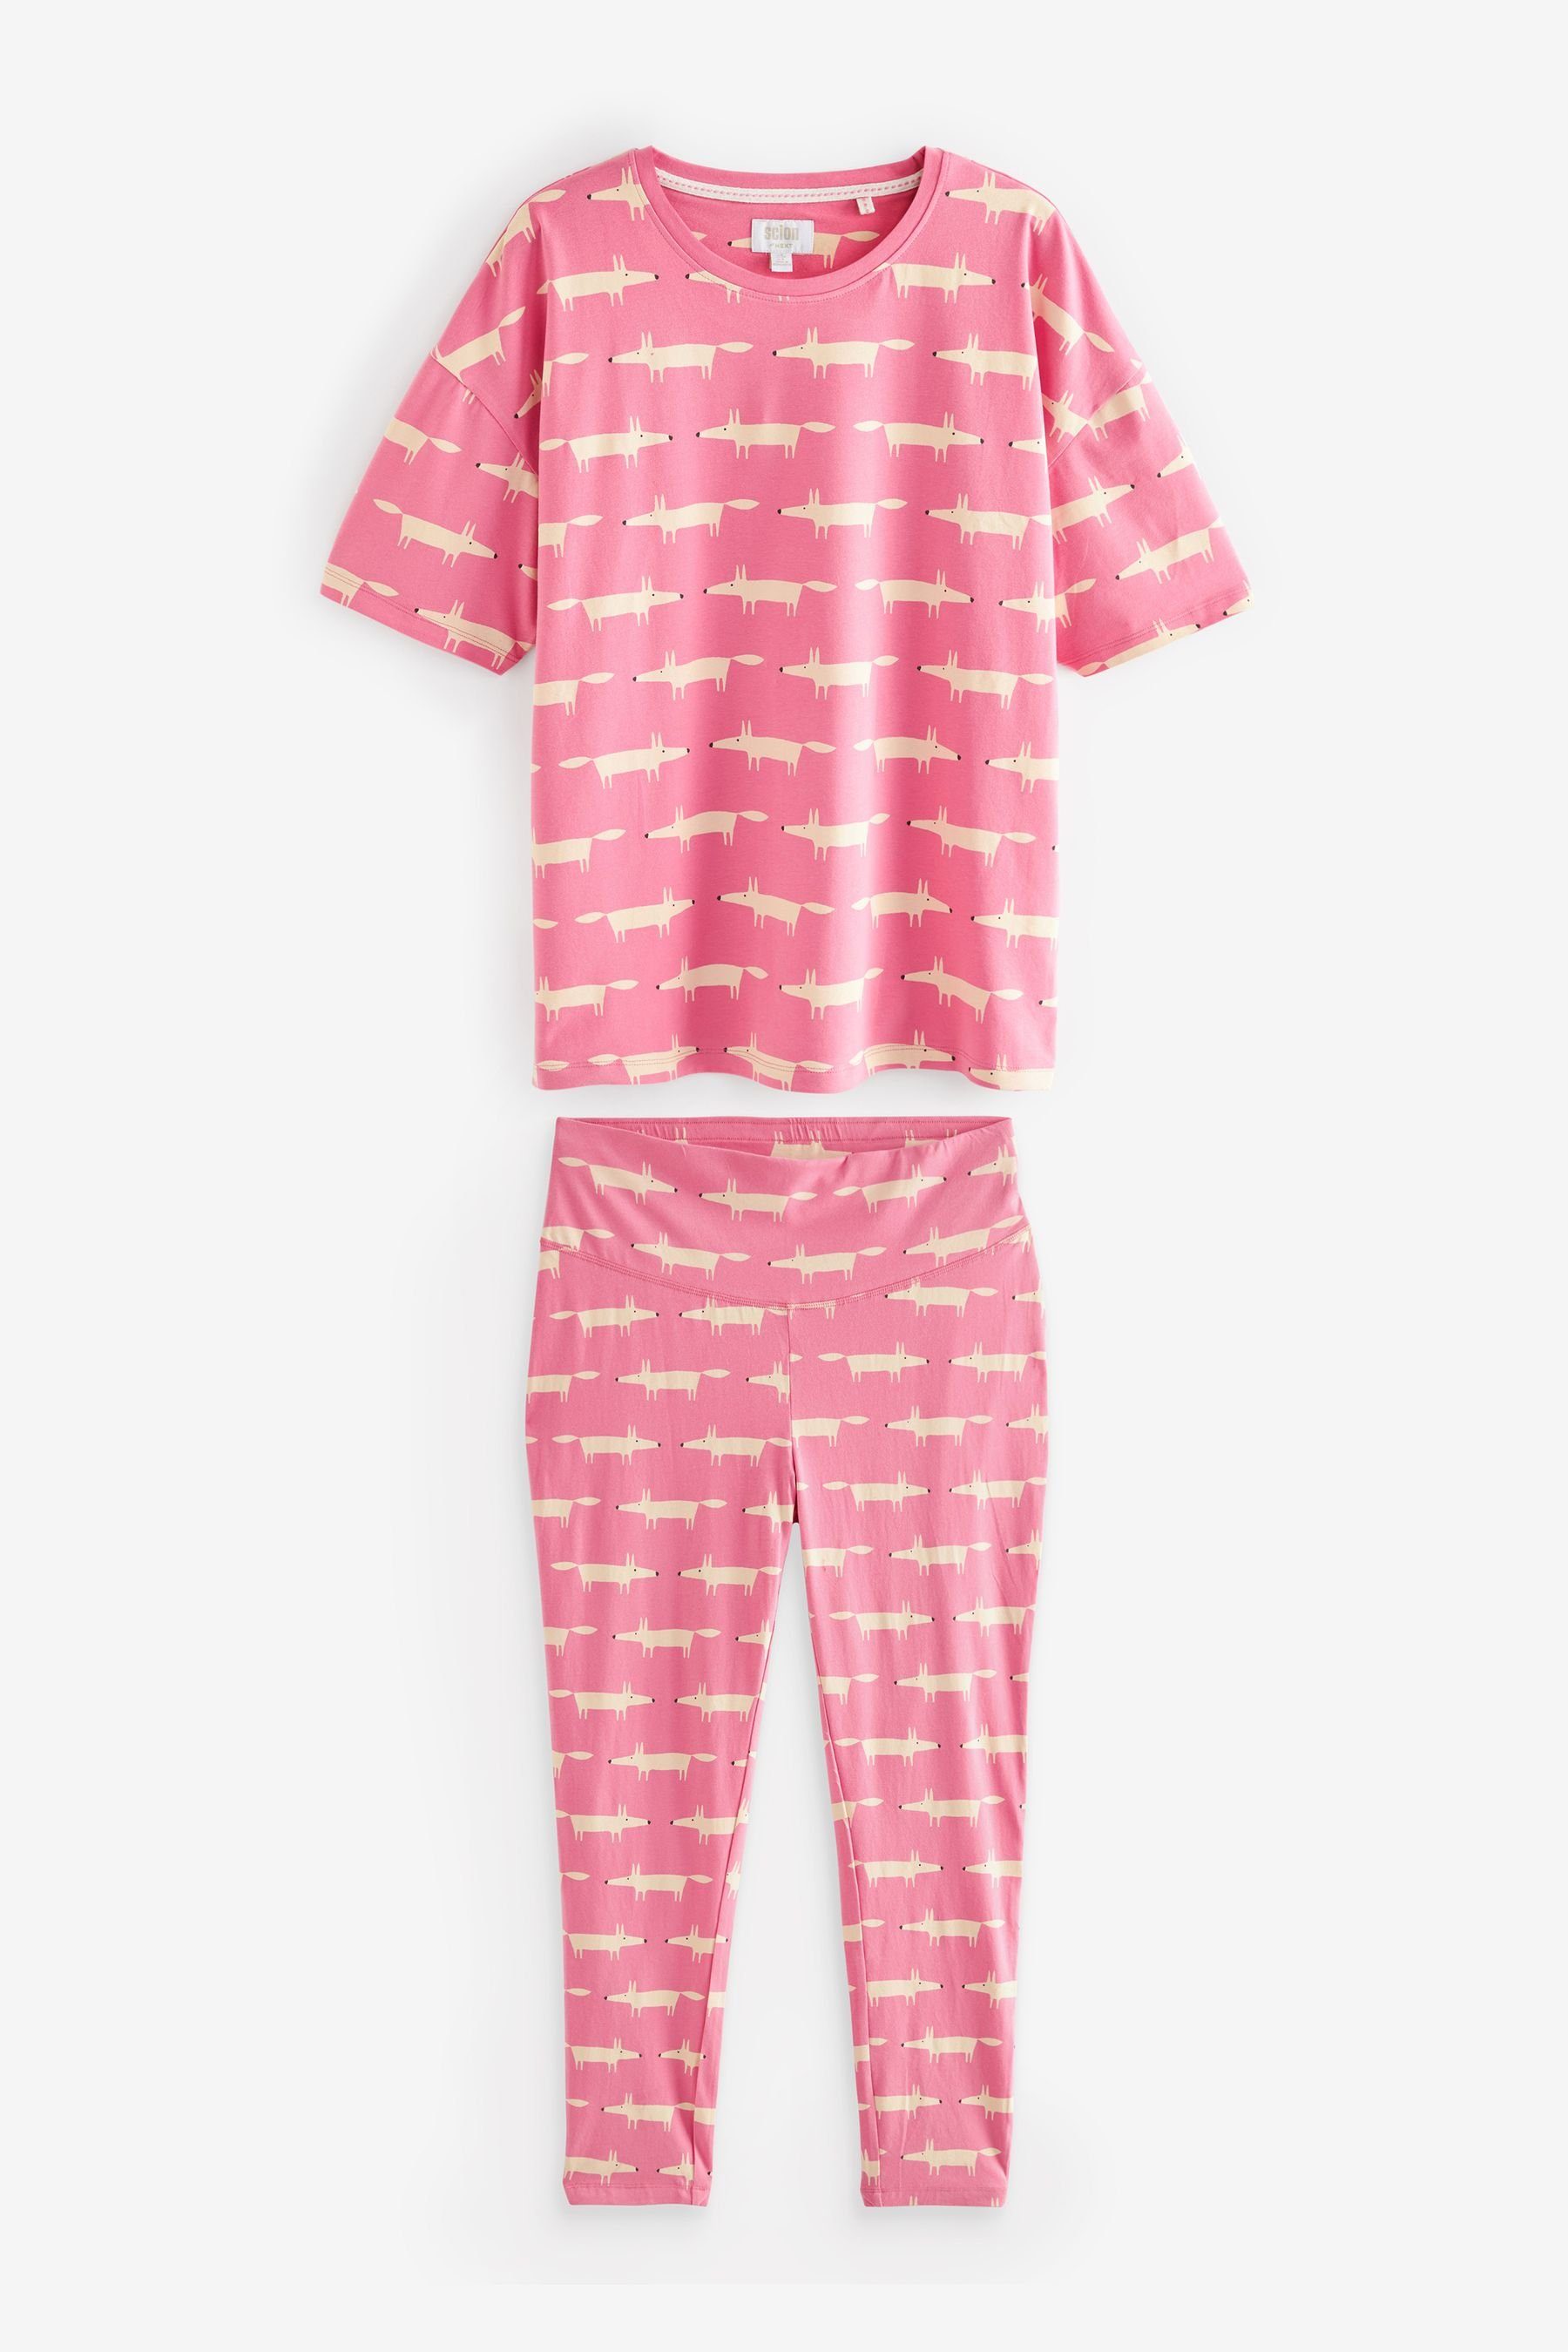 Next Pyjama Mr Fox Scion at Next Schlafanzug mit Leggings (2 tlg)